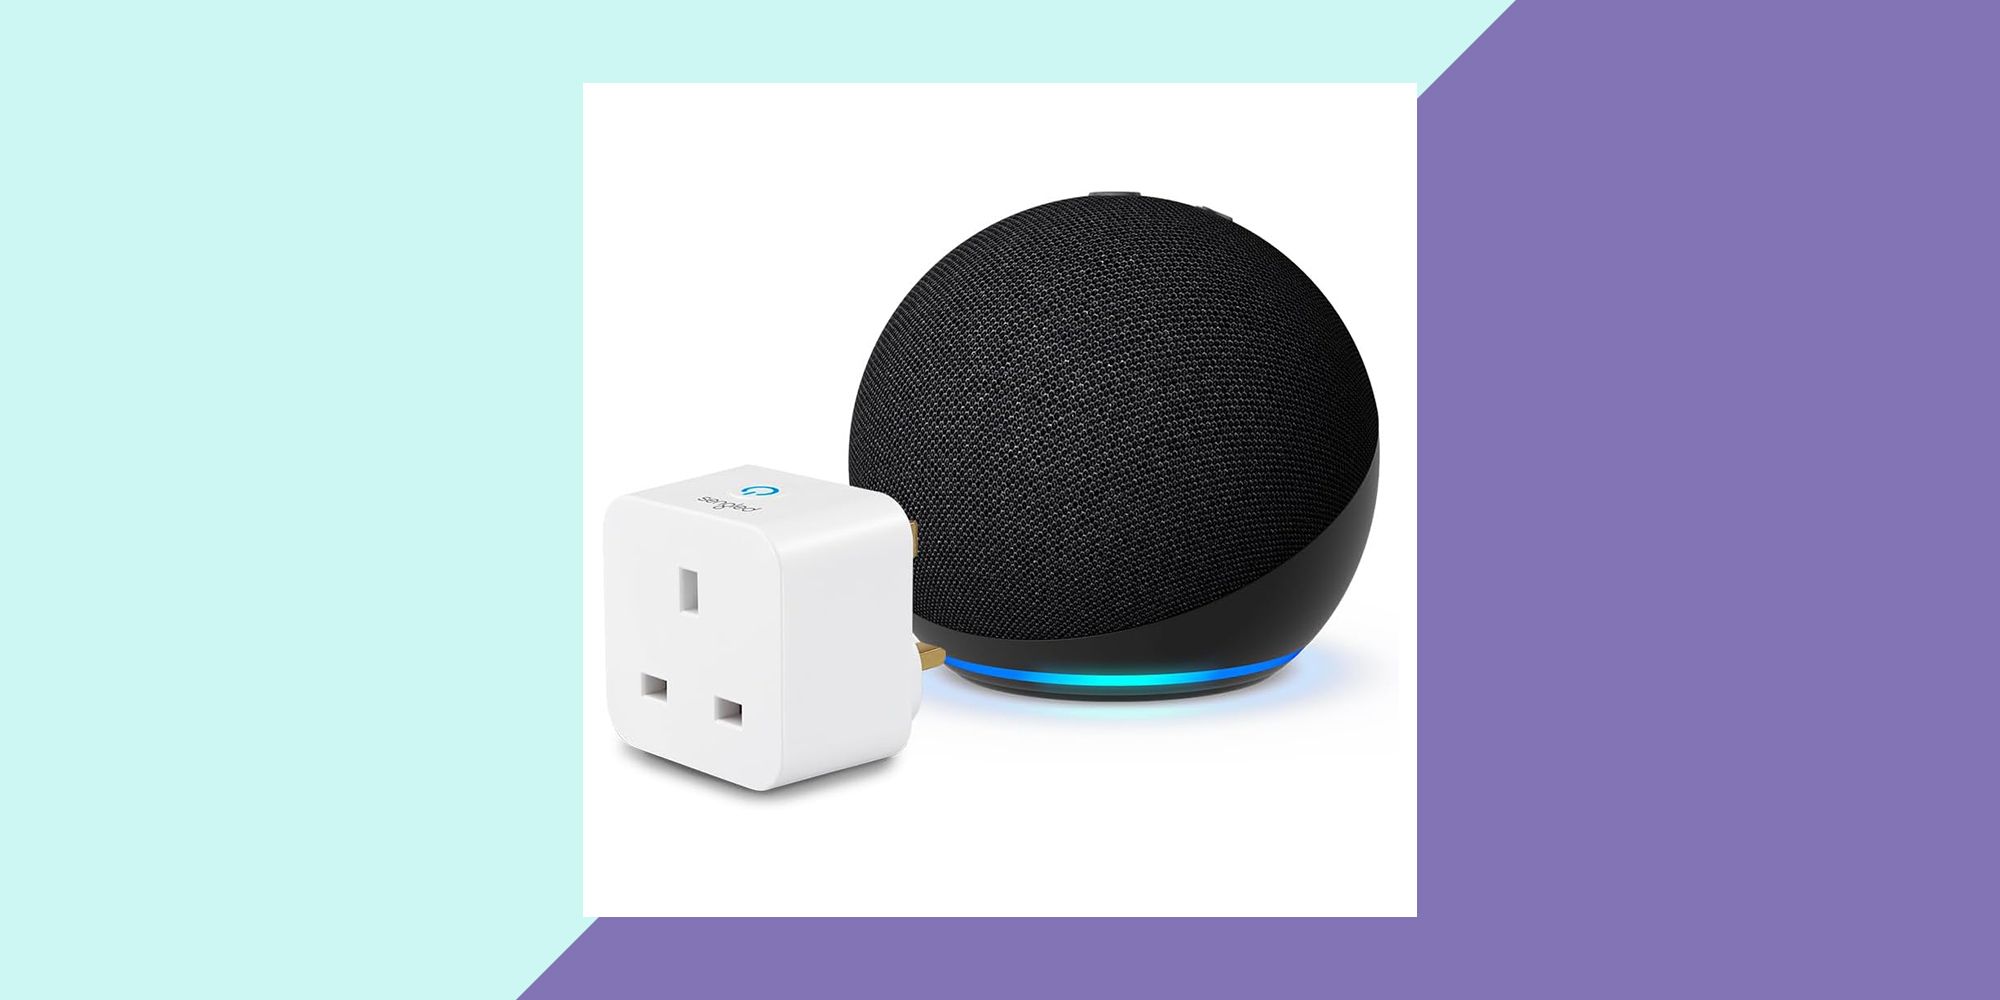 Echo Dot Black (3rd Generation) Smart Speaker with Alexa